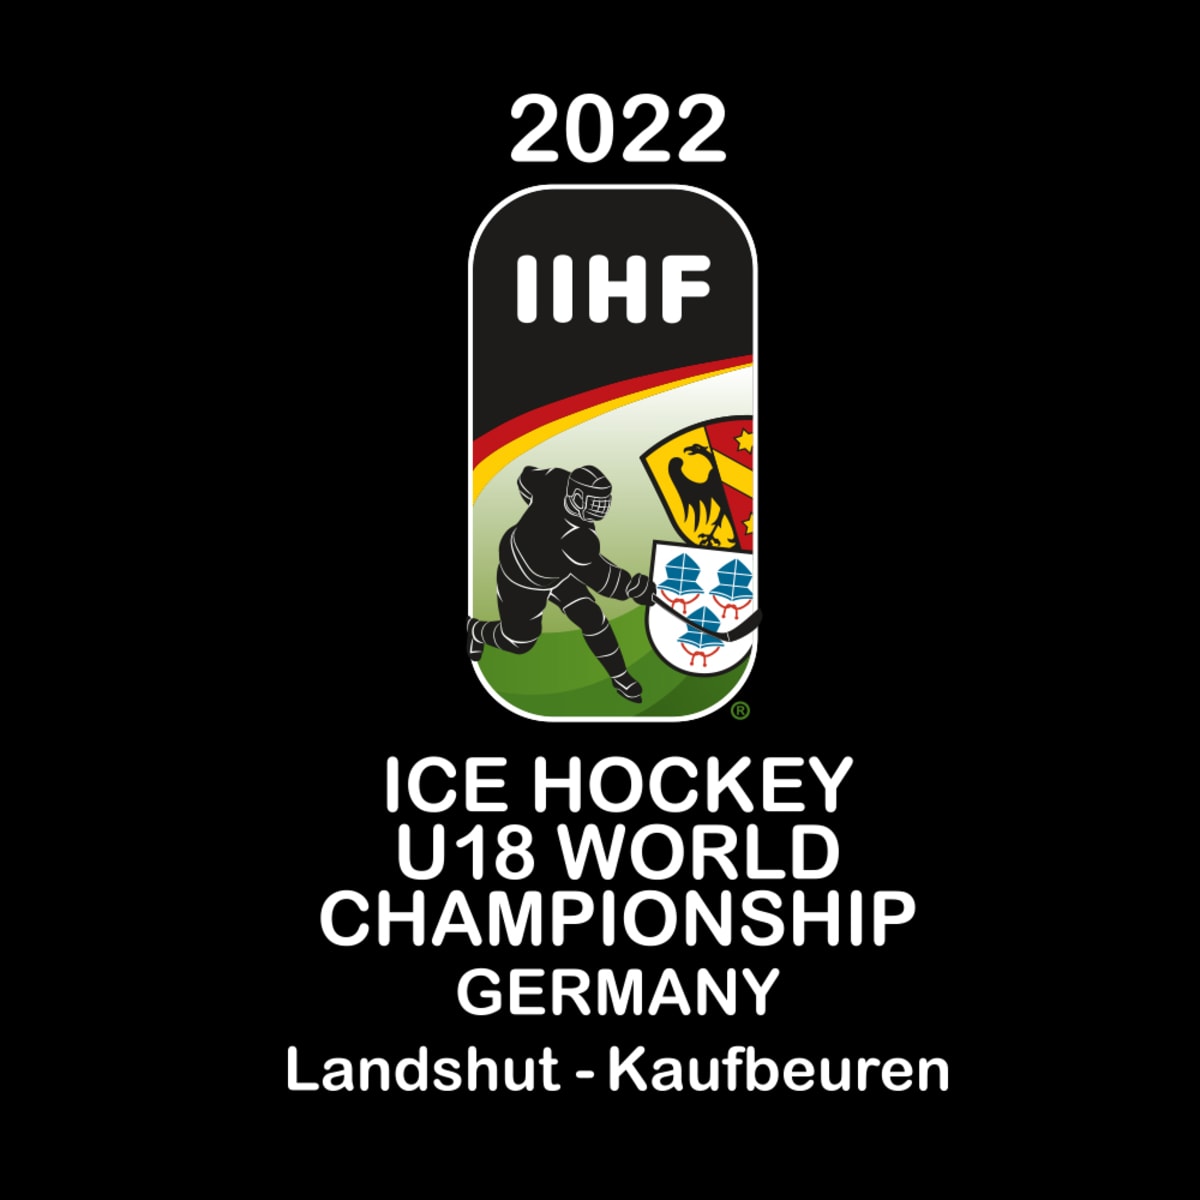 IIHF - Wild weekend ahead for IIHF eWorlds